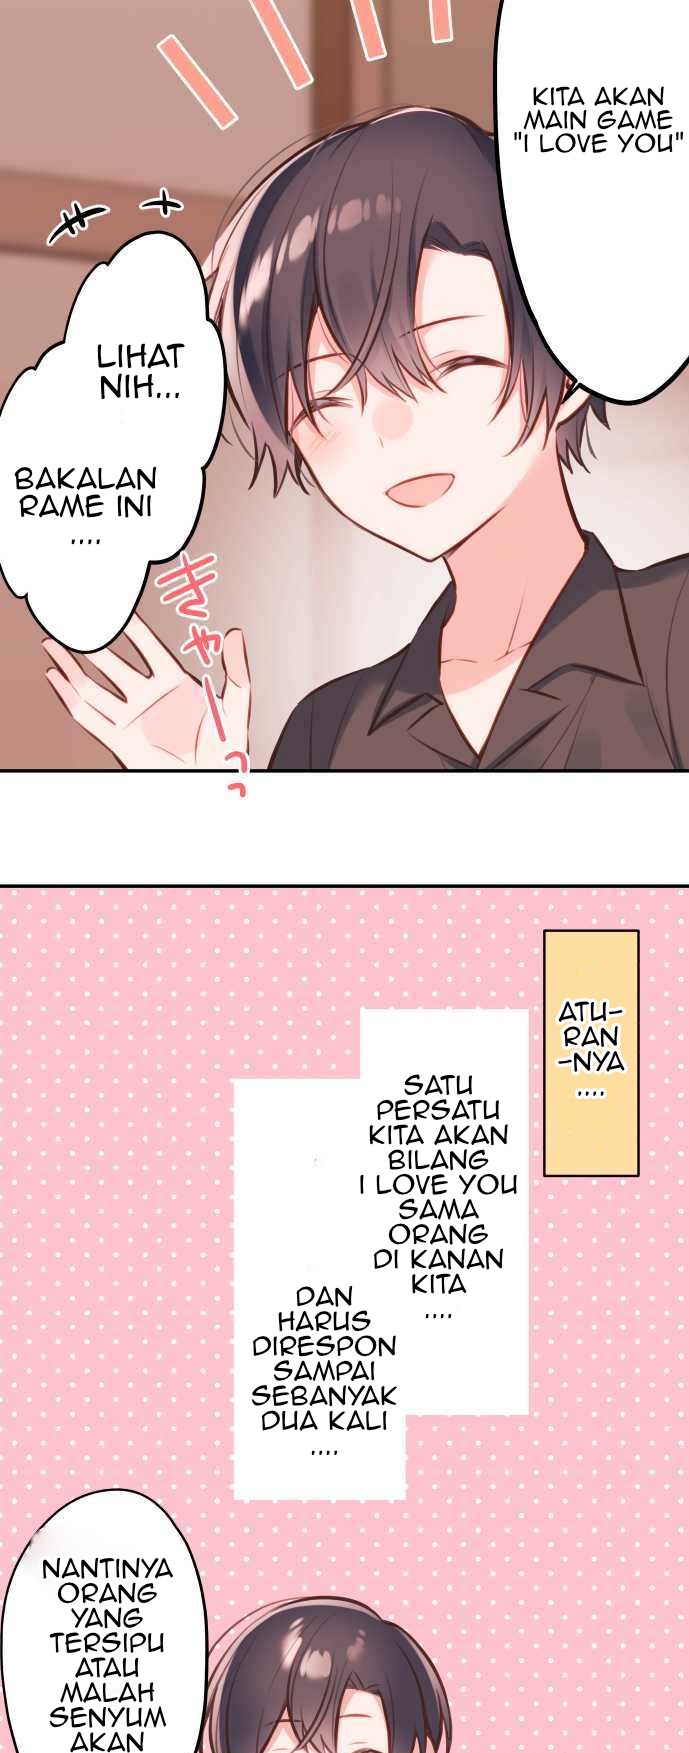 Waka-chan Is Flirty Again Chapter 58